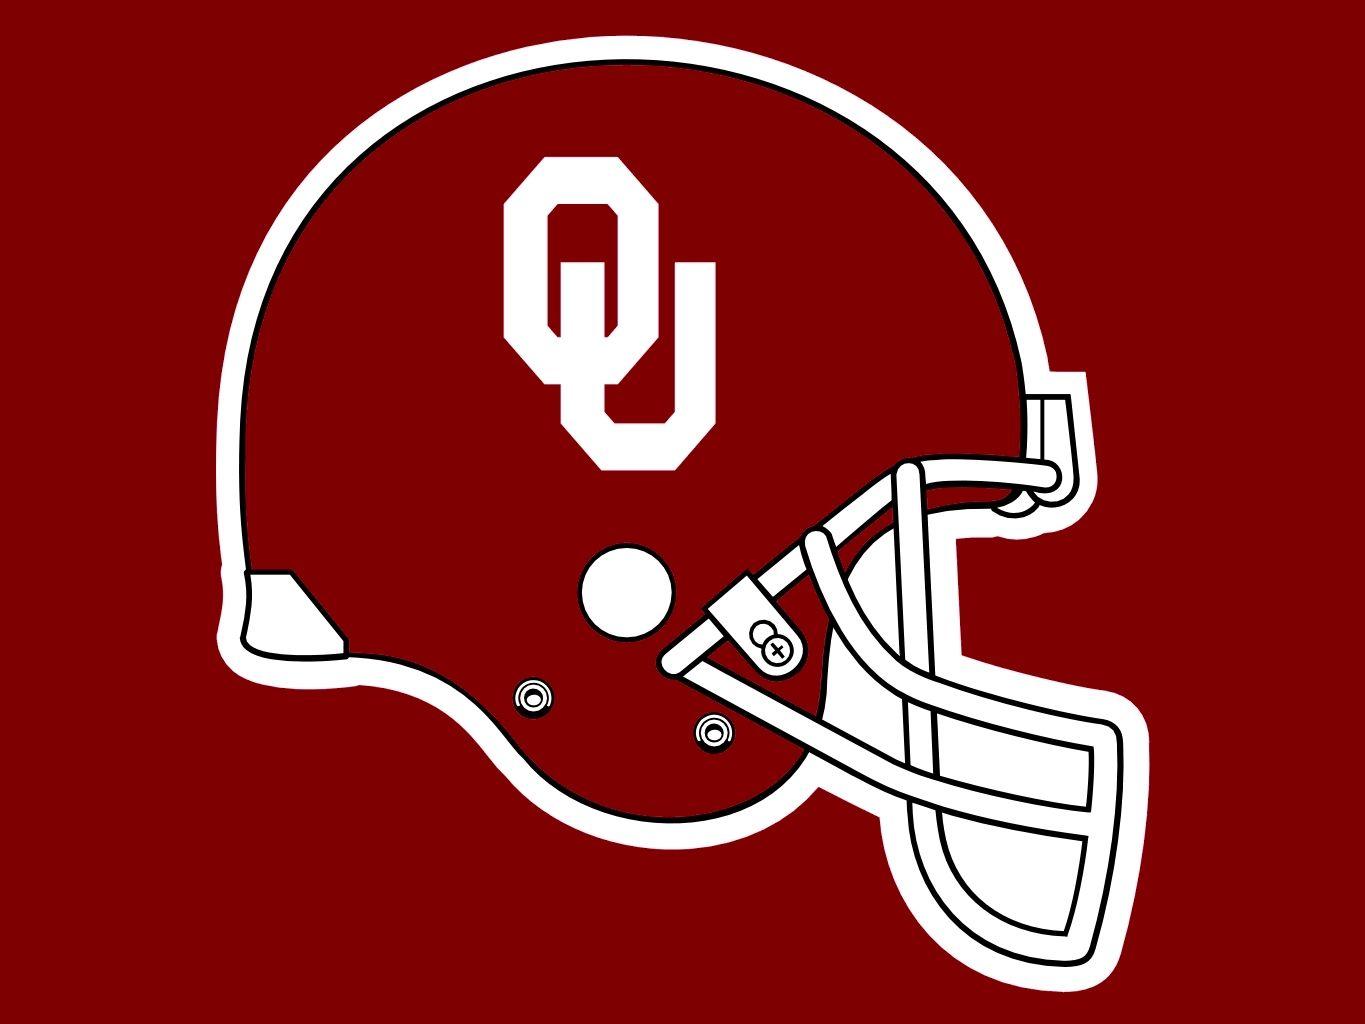 Oklahoma University Logo - Oklahoma Sooners Wallpaper and Screensavers - WallpaperSafari